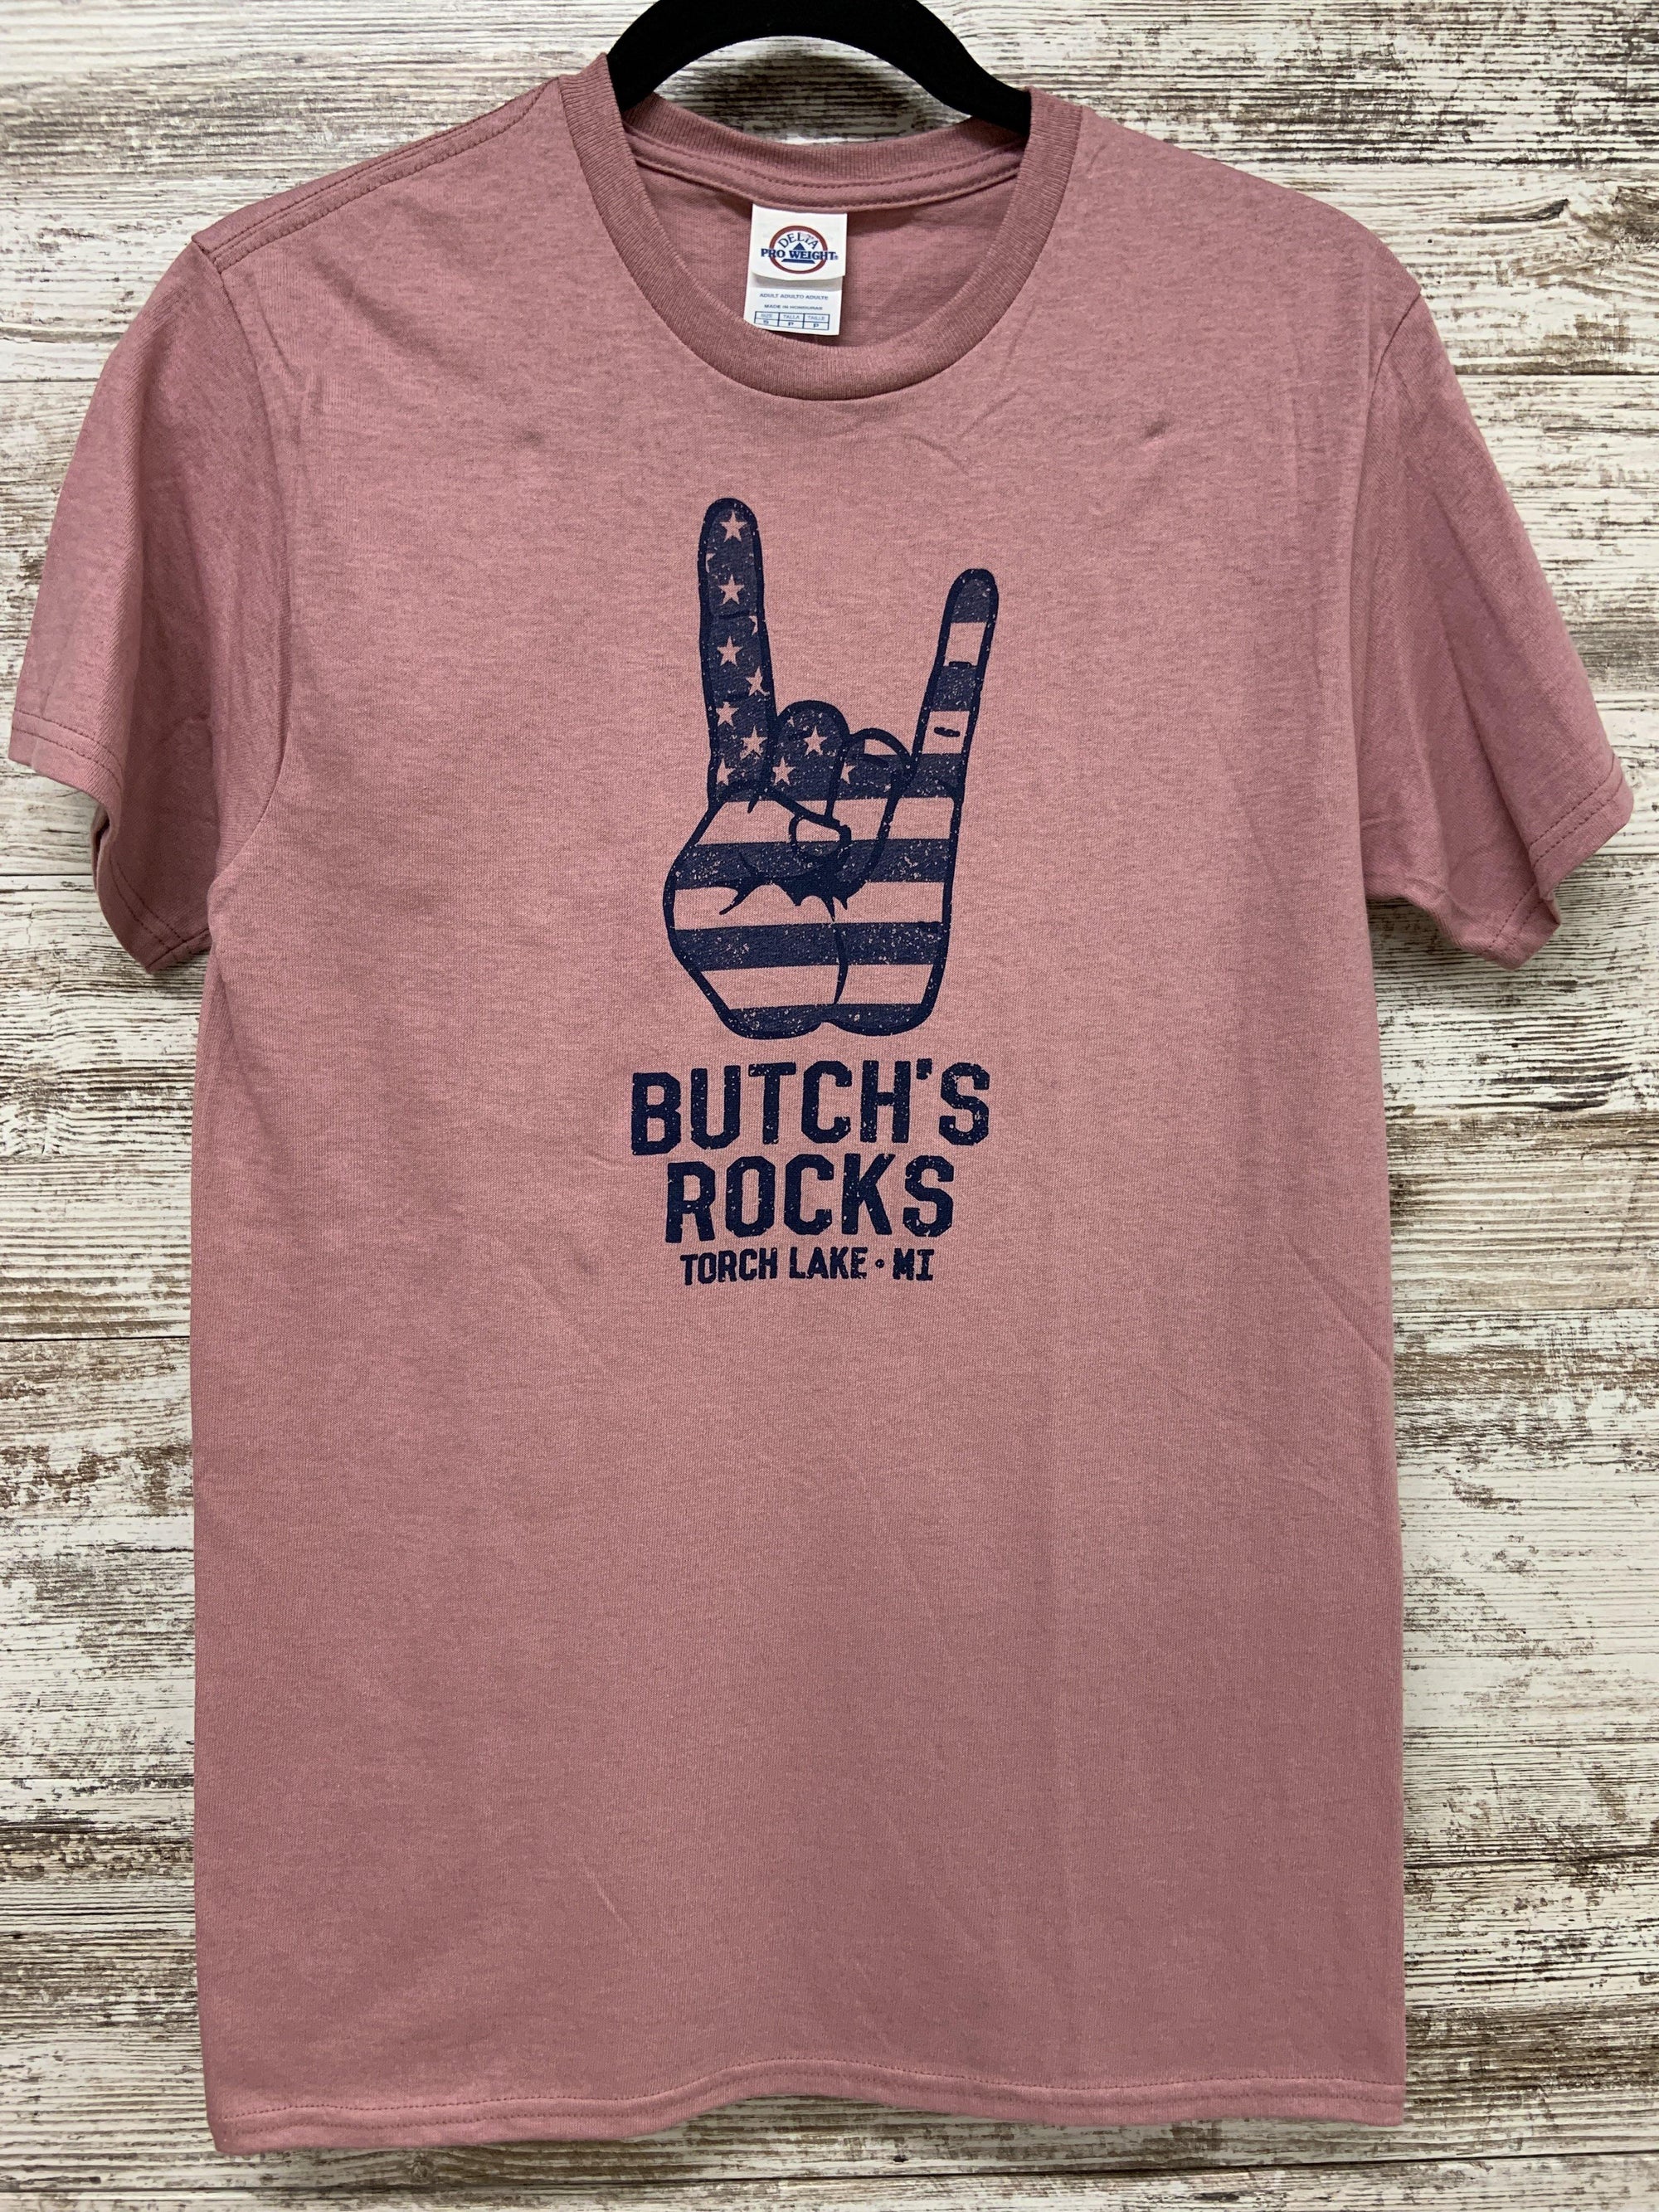 Tshirts - Butch's Tackle & Marine - Pontoon Rentals on Torch Lake